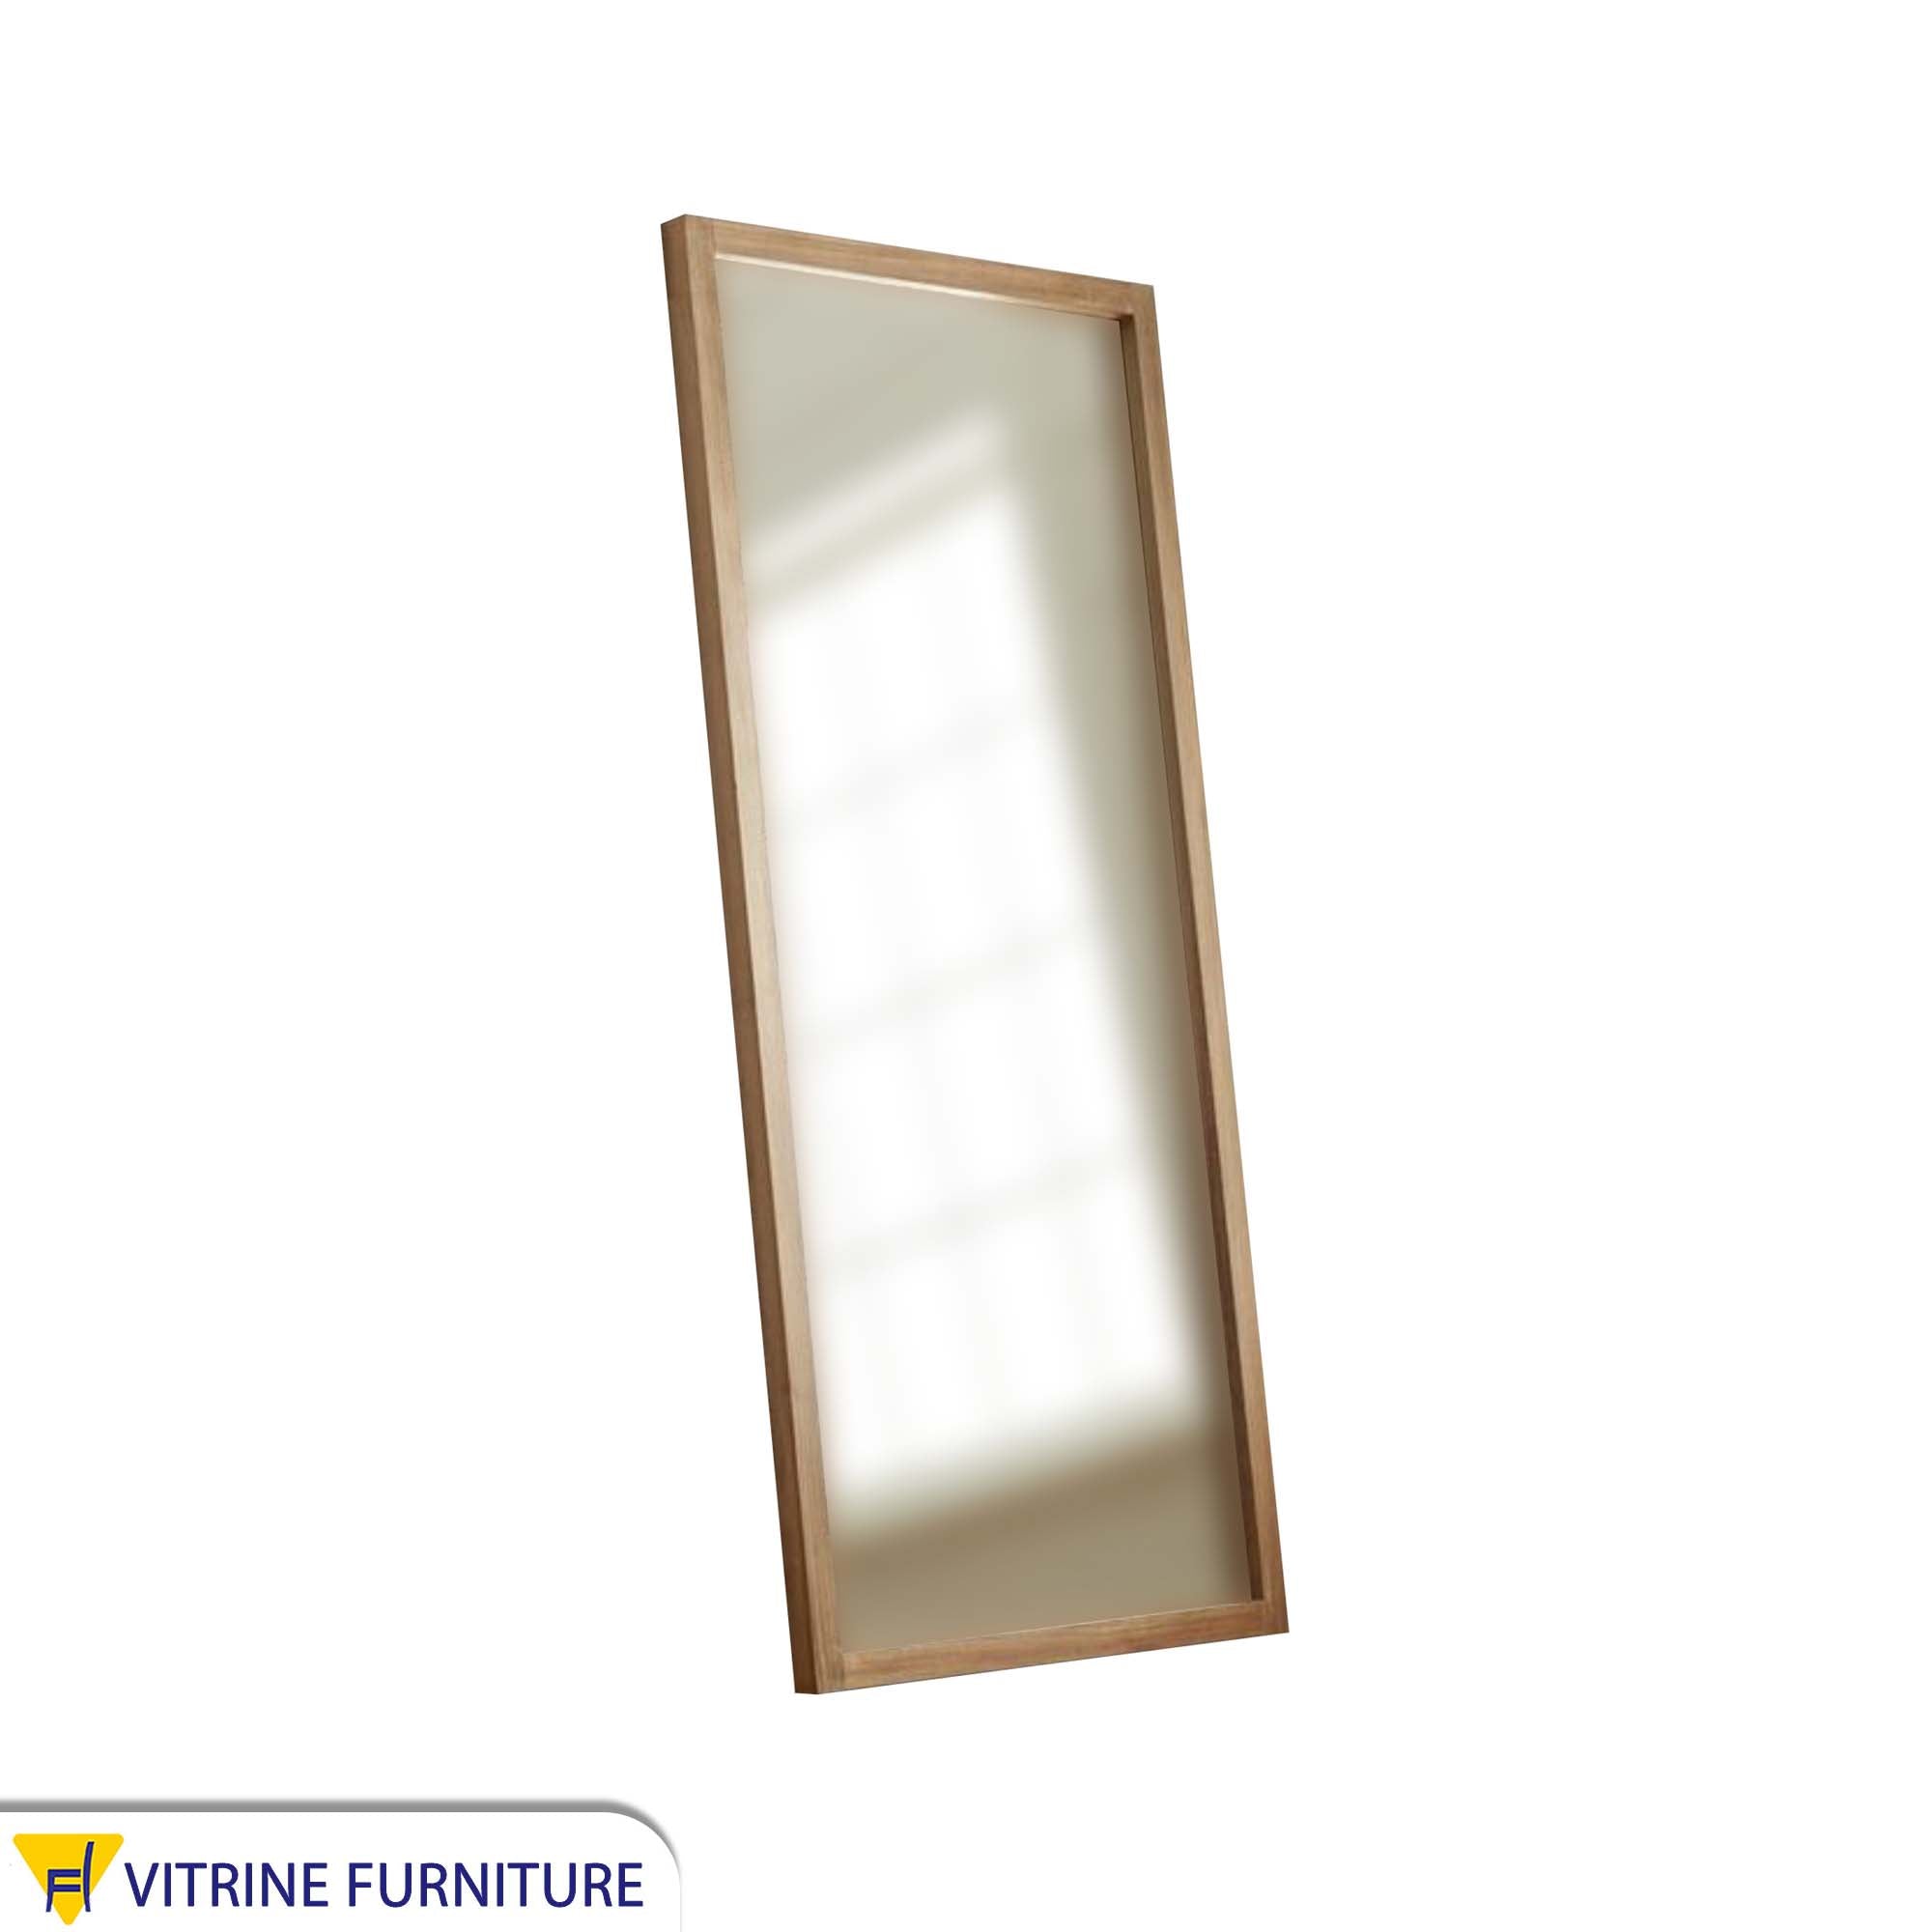 Modern rectangular mirror with a wooden frame